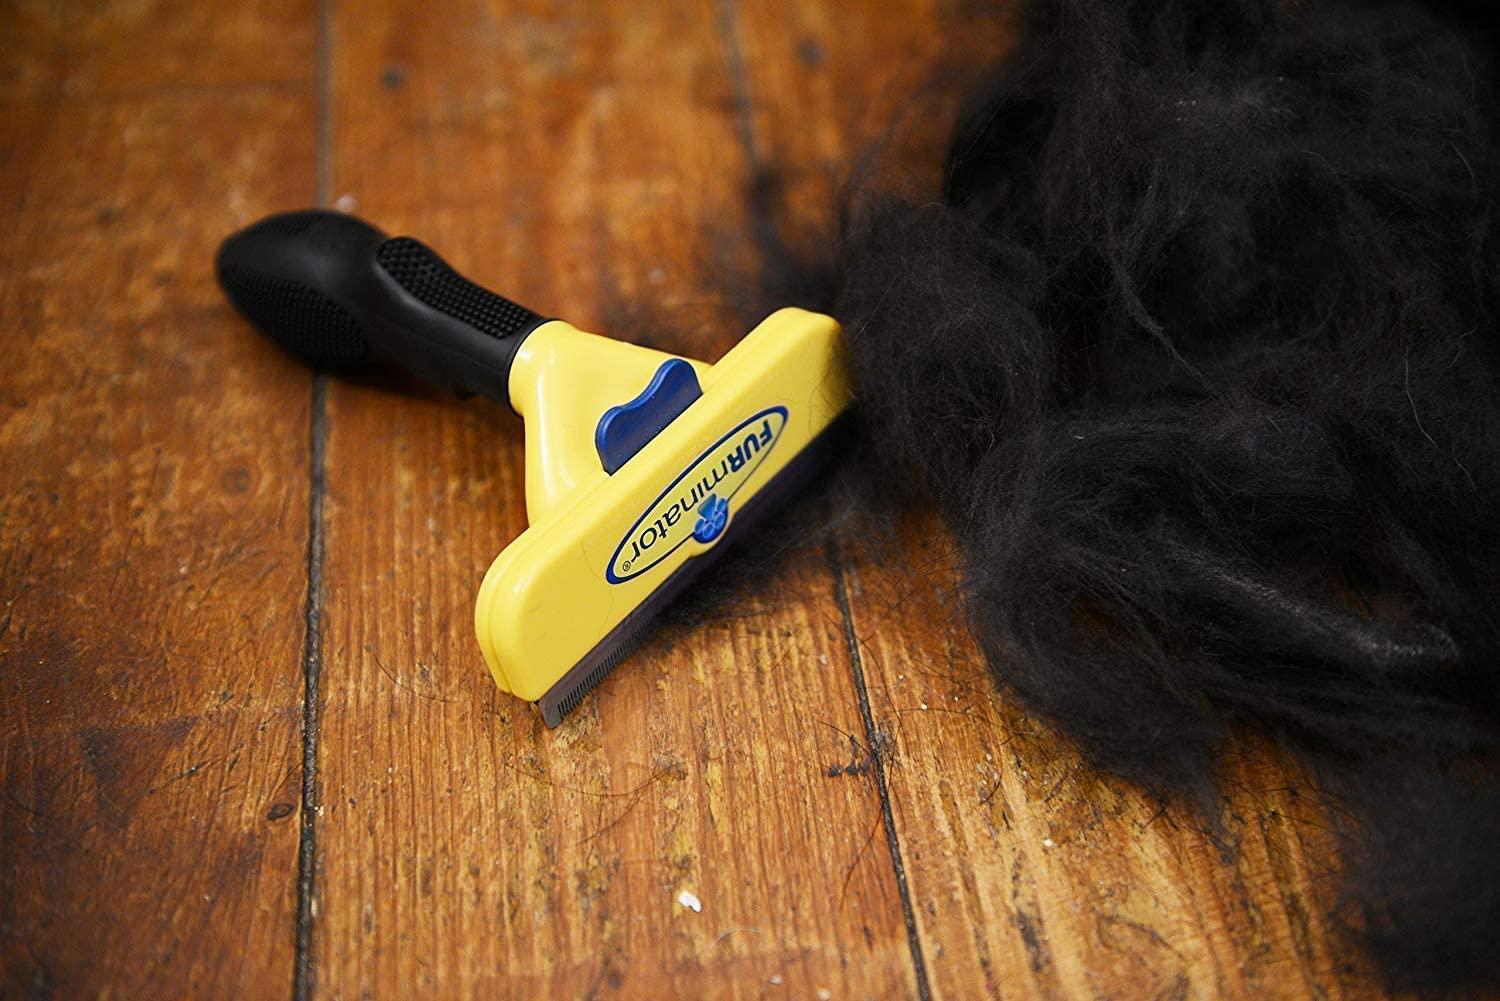 FURminator Short Hair deShedding Tool for Dogs (large)